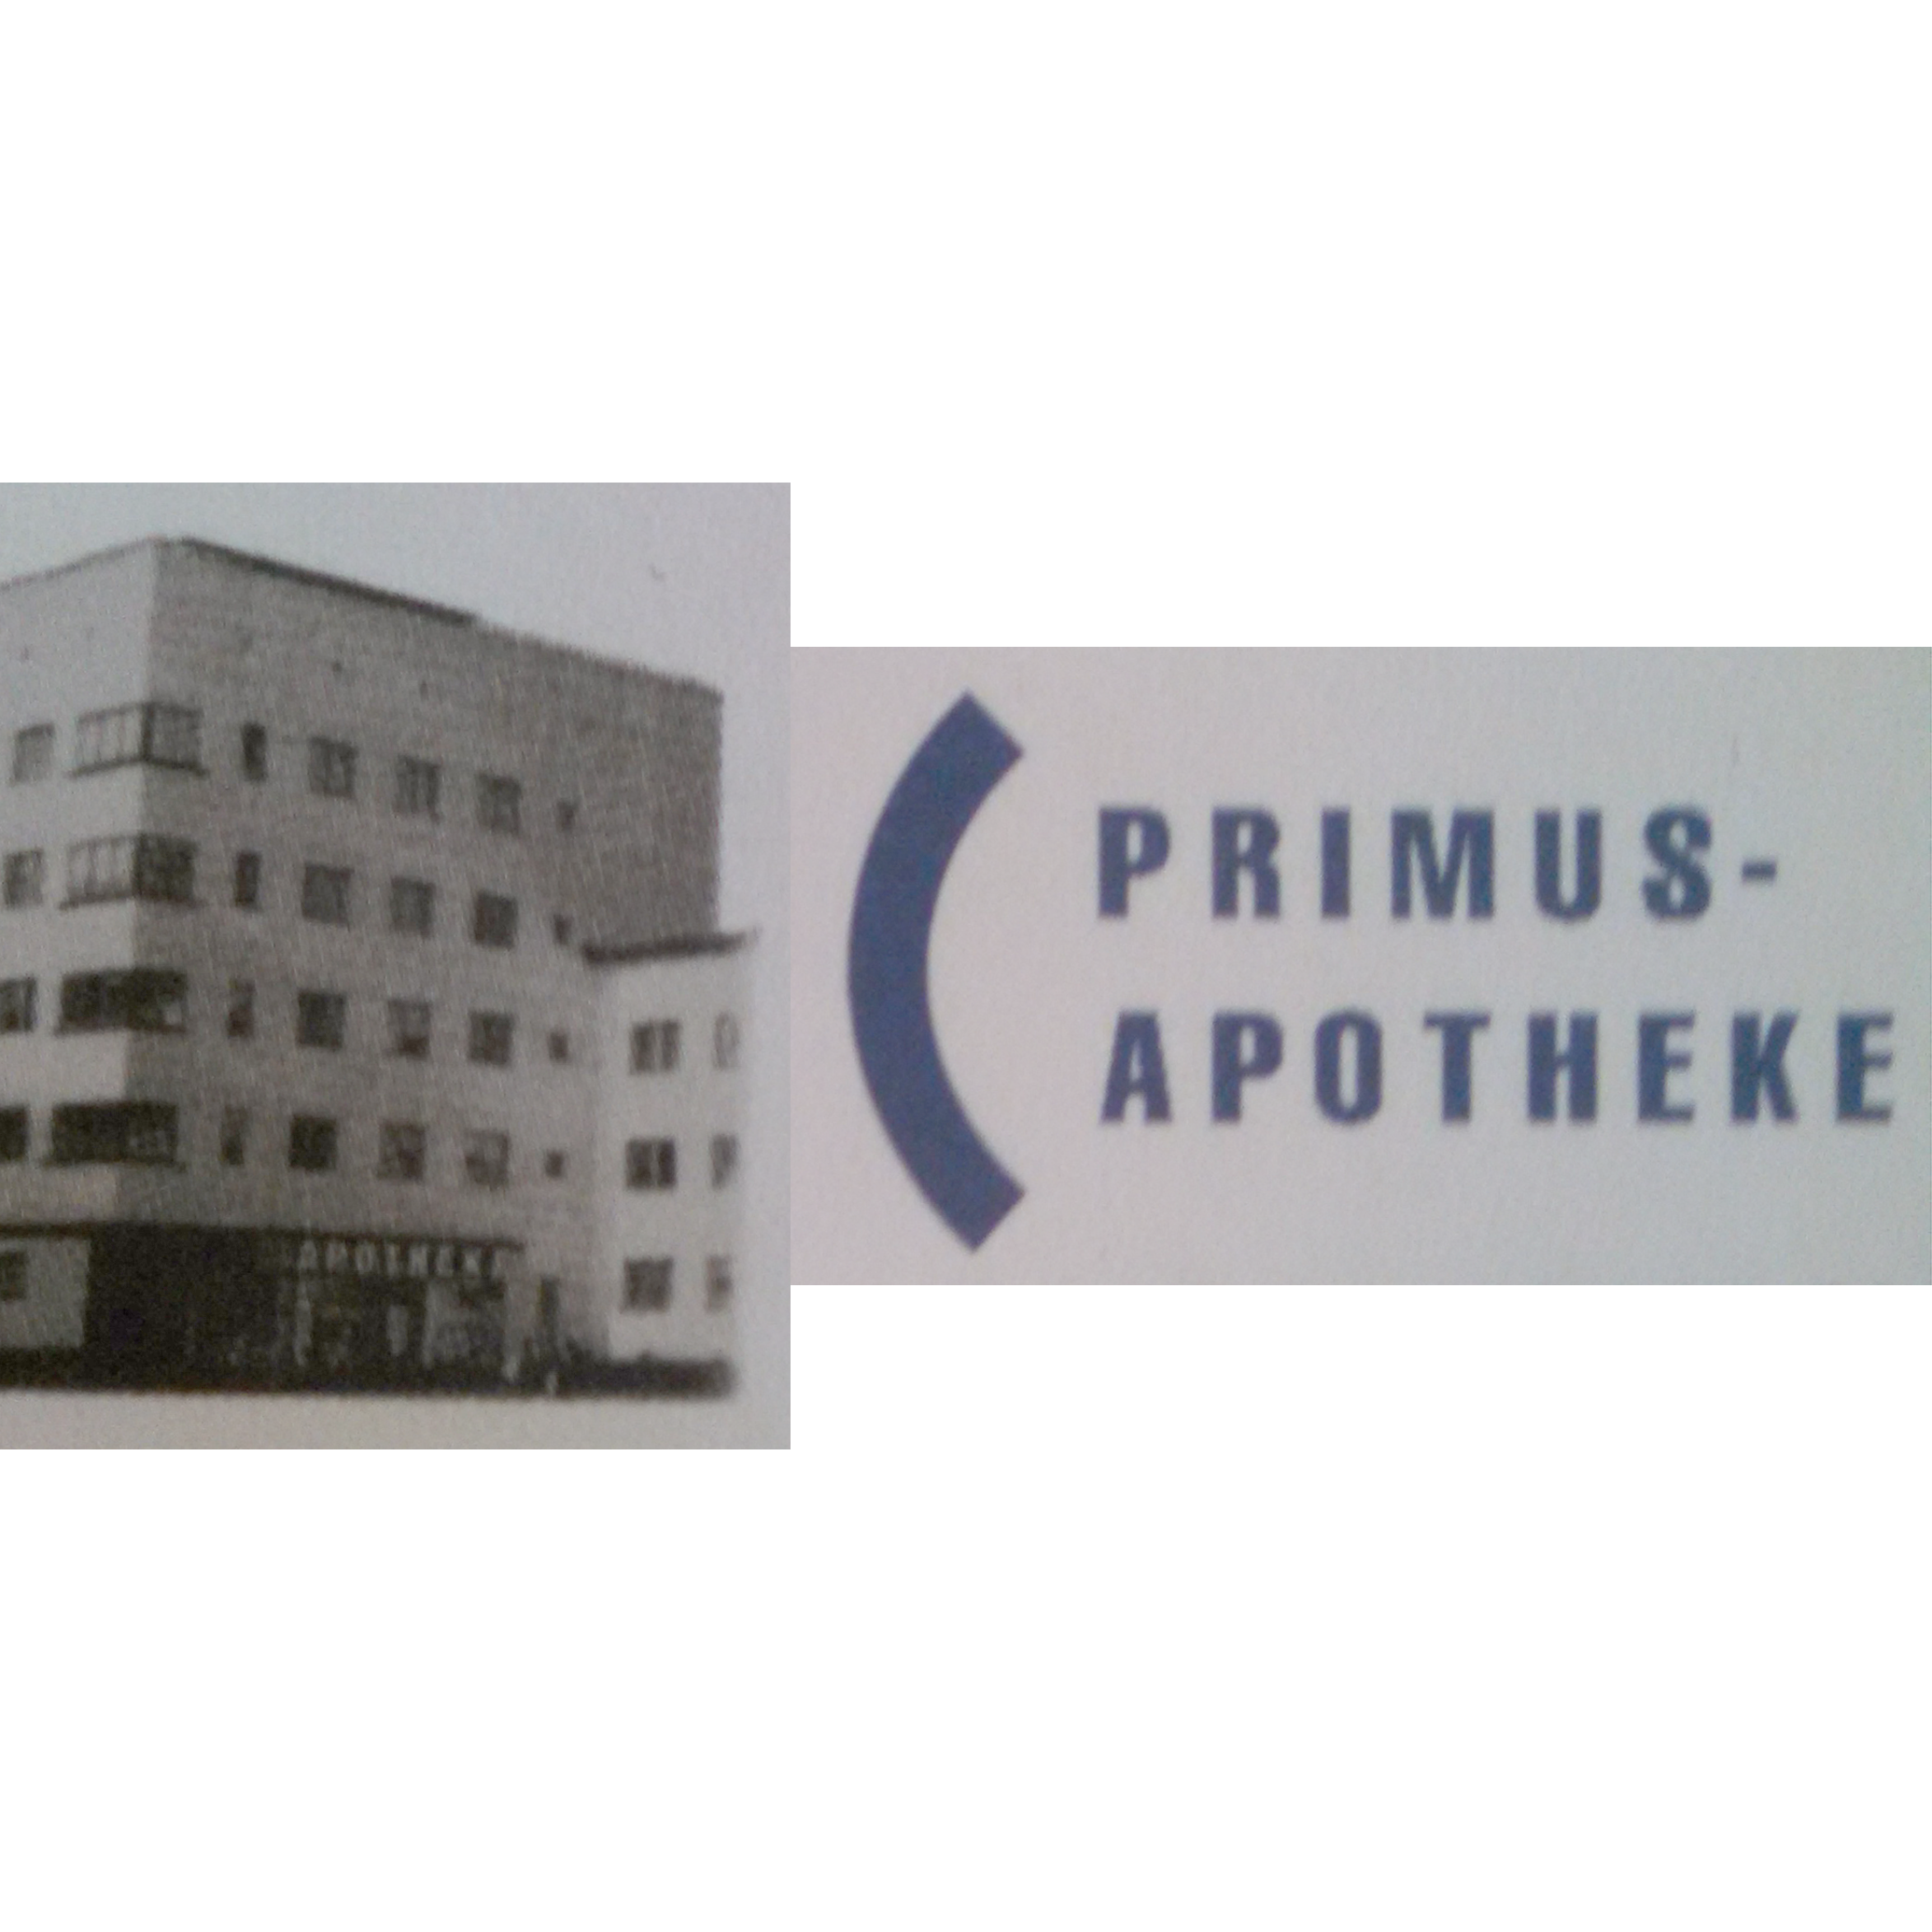 Primus-Apotheke  